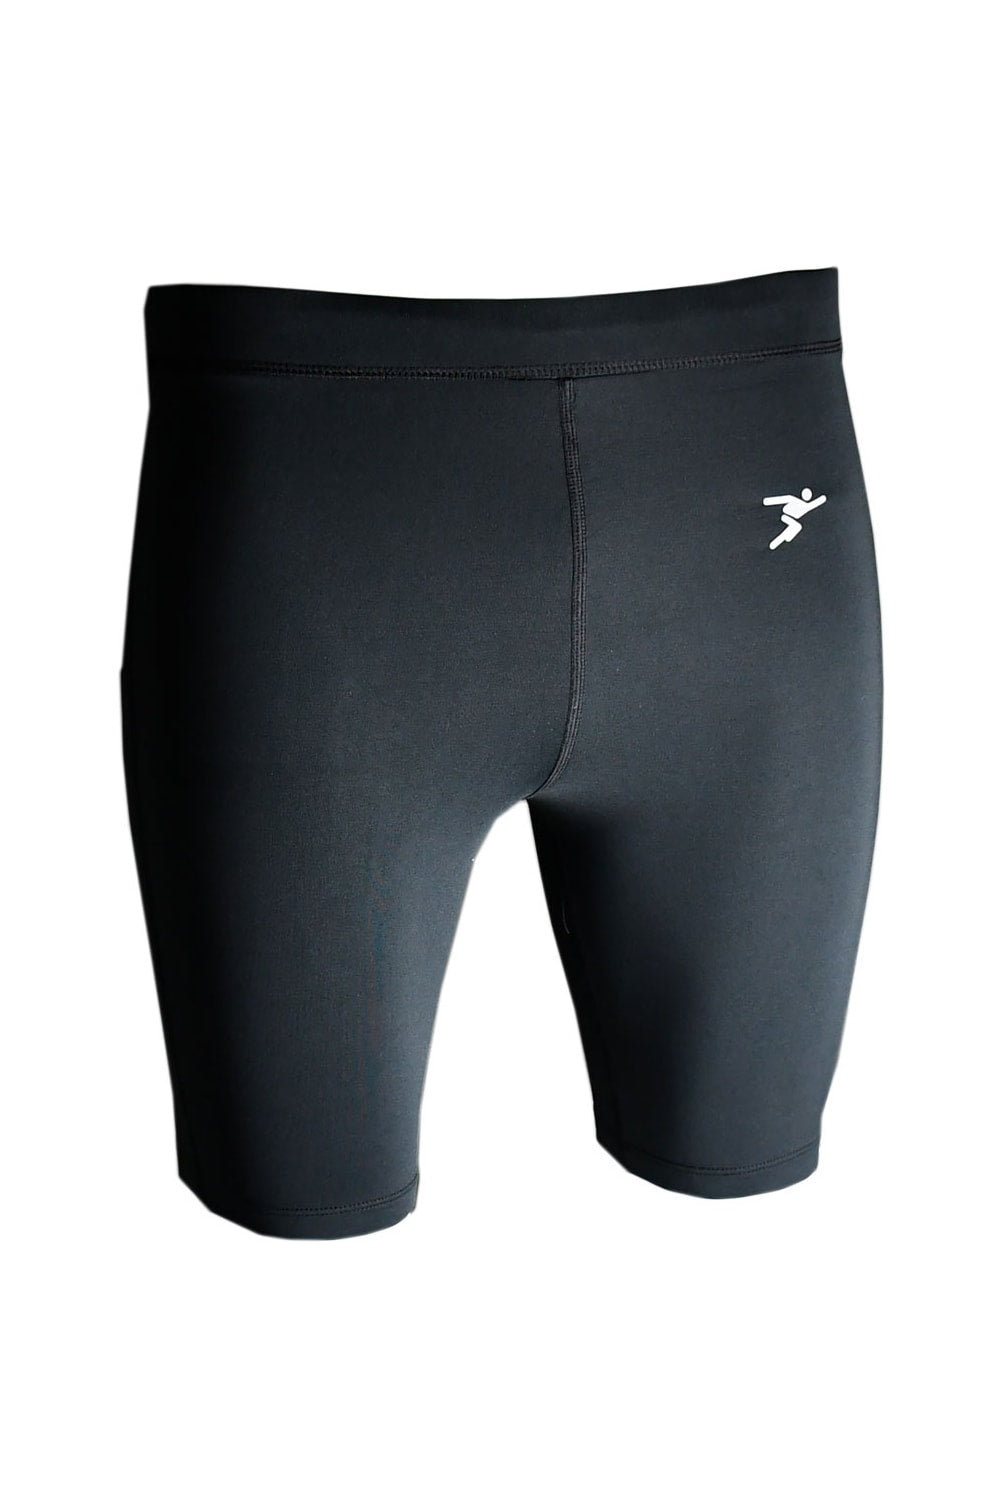 Precision Unisex Adult Essential Baselayer Sports Shorts (Black)